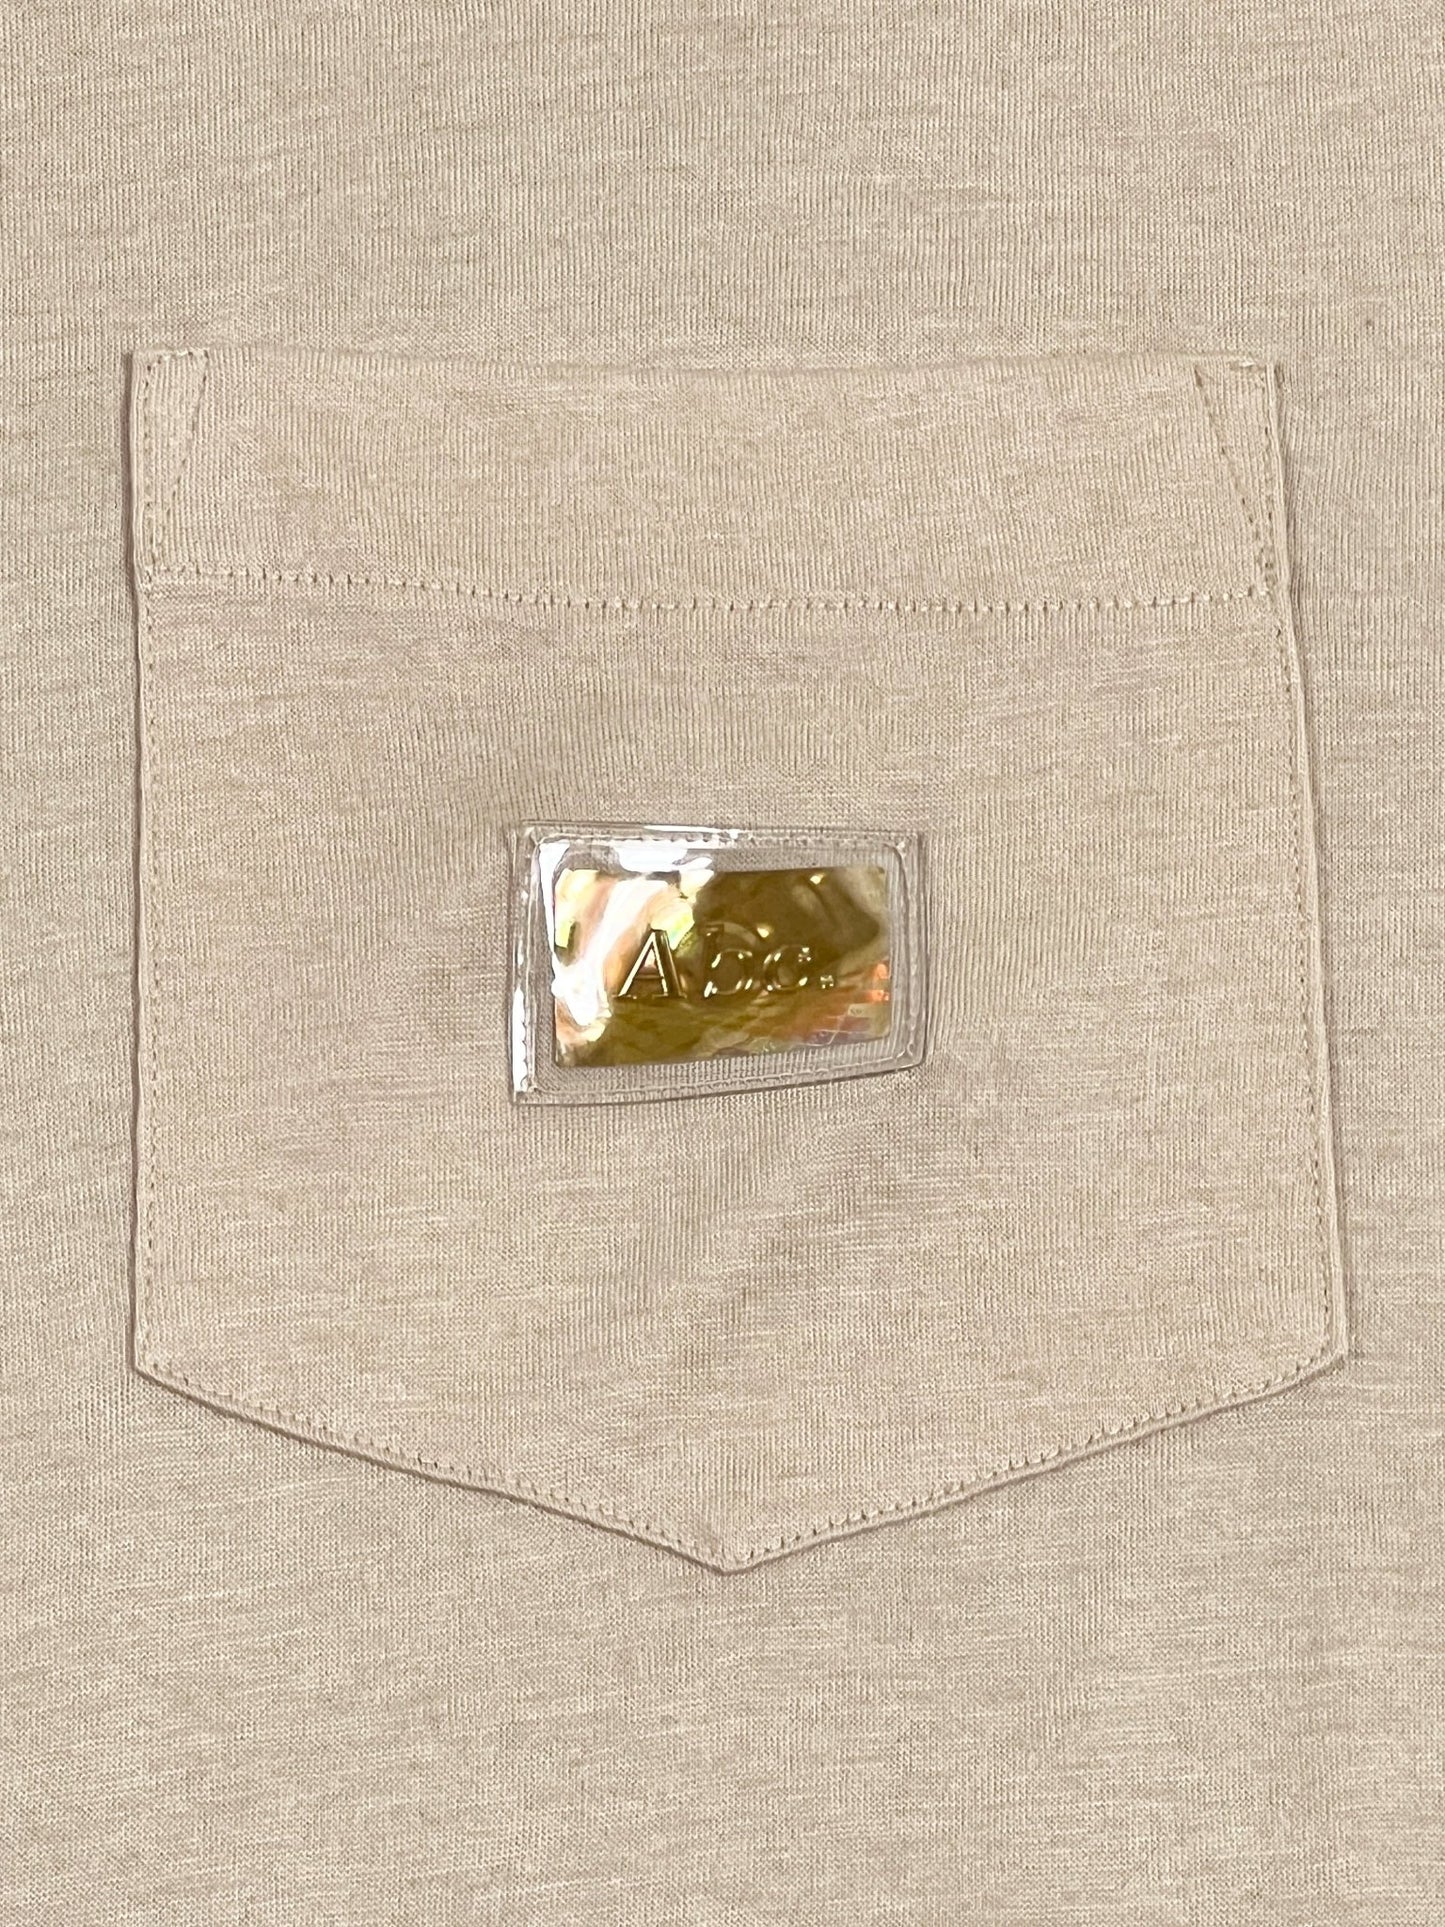 The pocket of a ADVISORY BOARD CRYSTALS S/S POCKET TEE FELDSPAR ECRU cotton t-shirt with a logo on it.